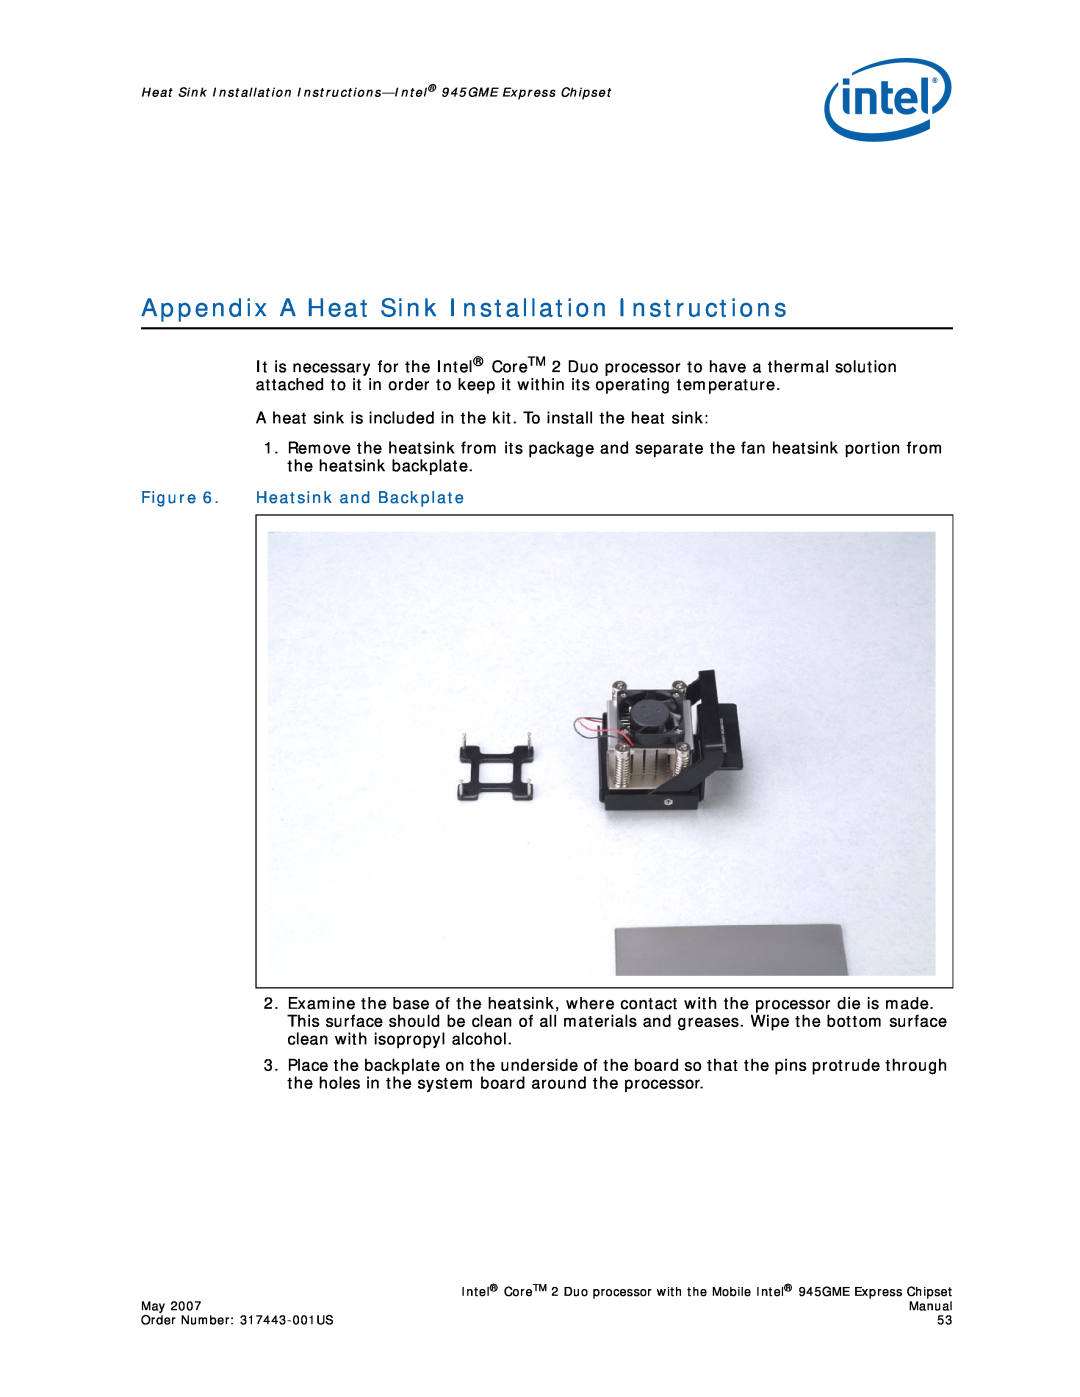 Intel 317443-001US user manual Appendix A Heat Sink Installation Instructions, Heatsink and Backplate 